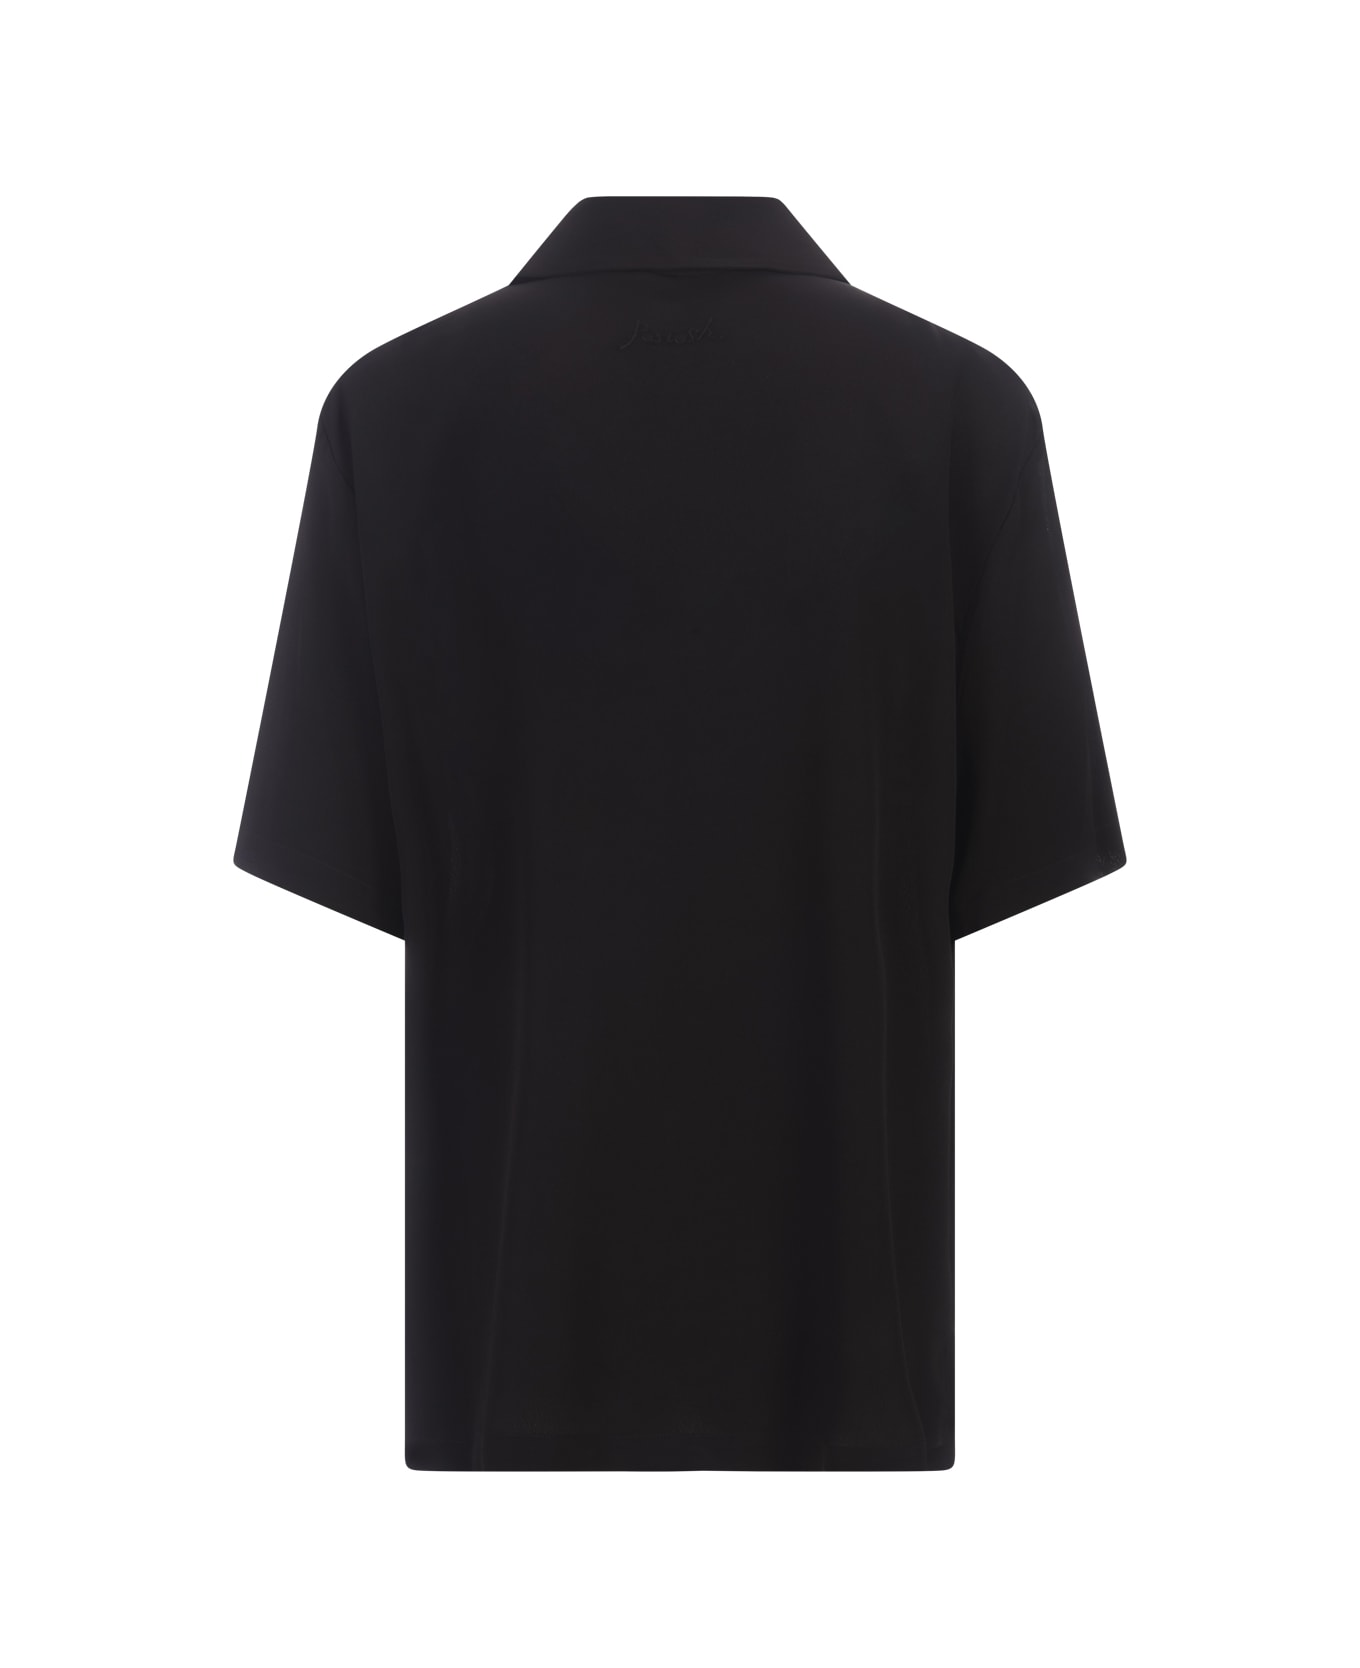 Parosh Black Ralm Shirt With Palm Embroidery - Black